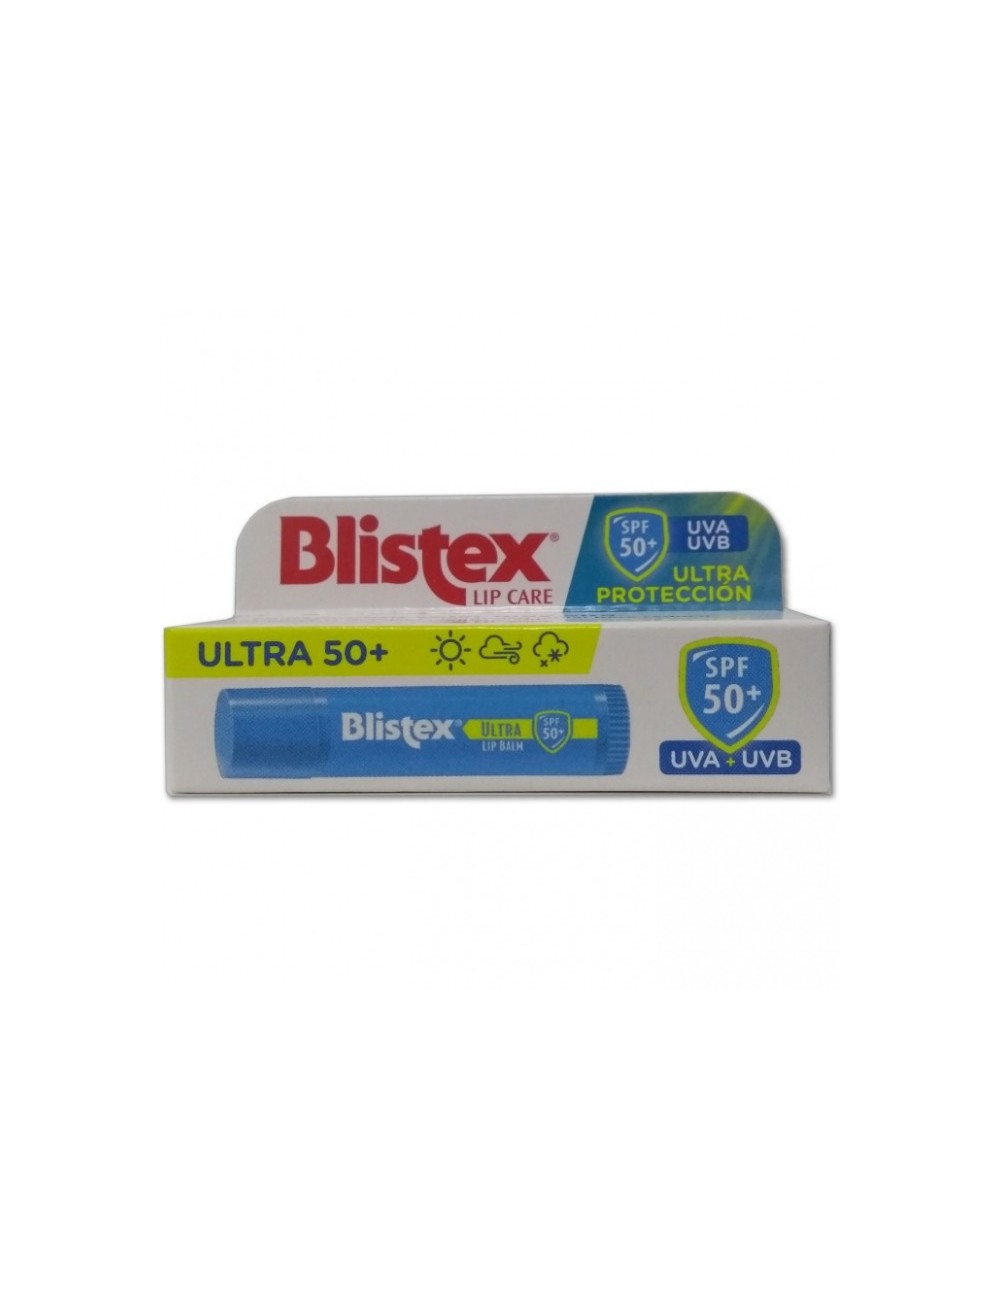 BLISTEX ULTRA 50+ 4.25 G